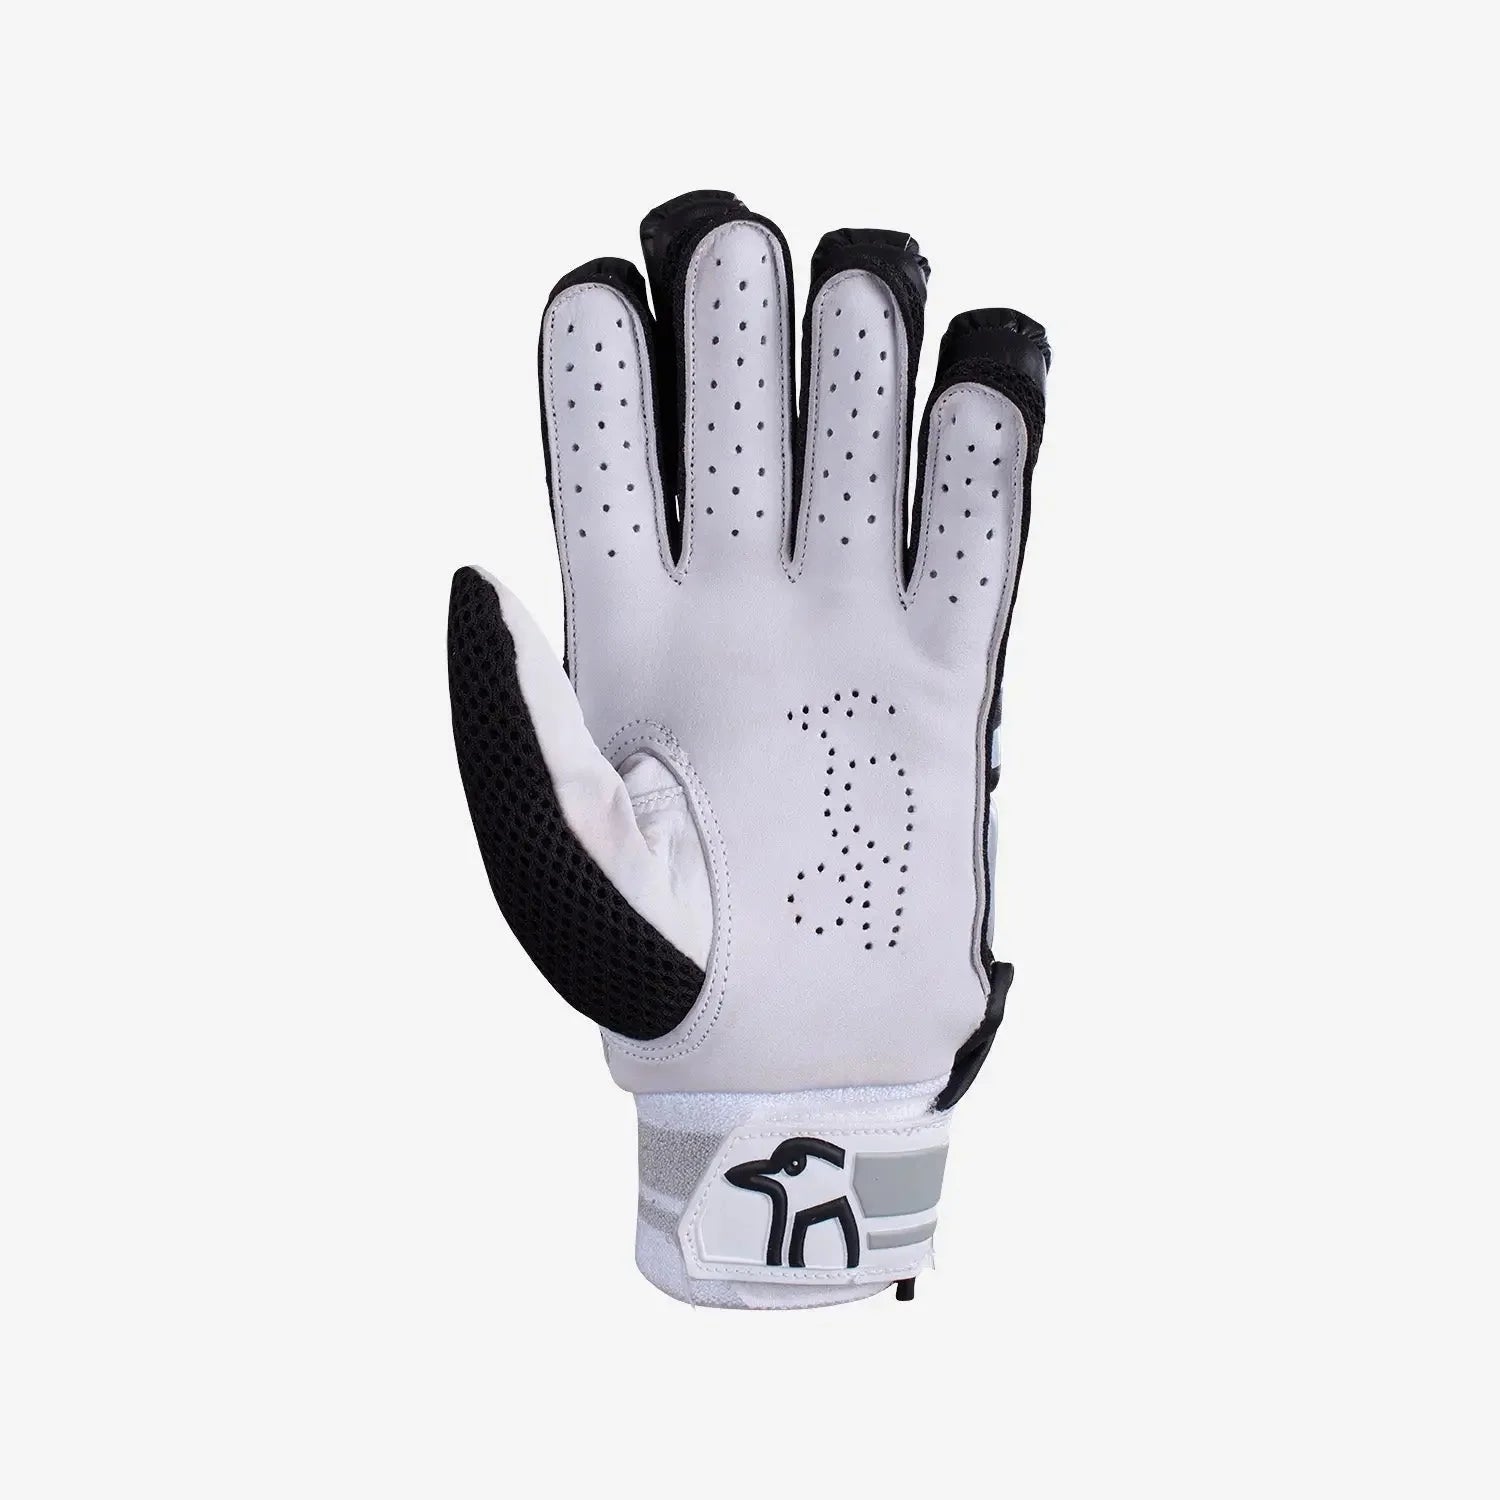 Kookaburra 4.1 T20 Black Cricket Batting Gloves 2023 - GLOVE - BATTING